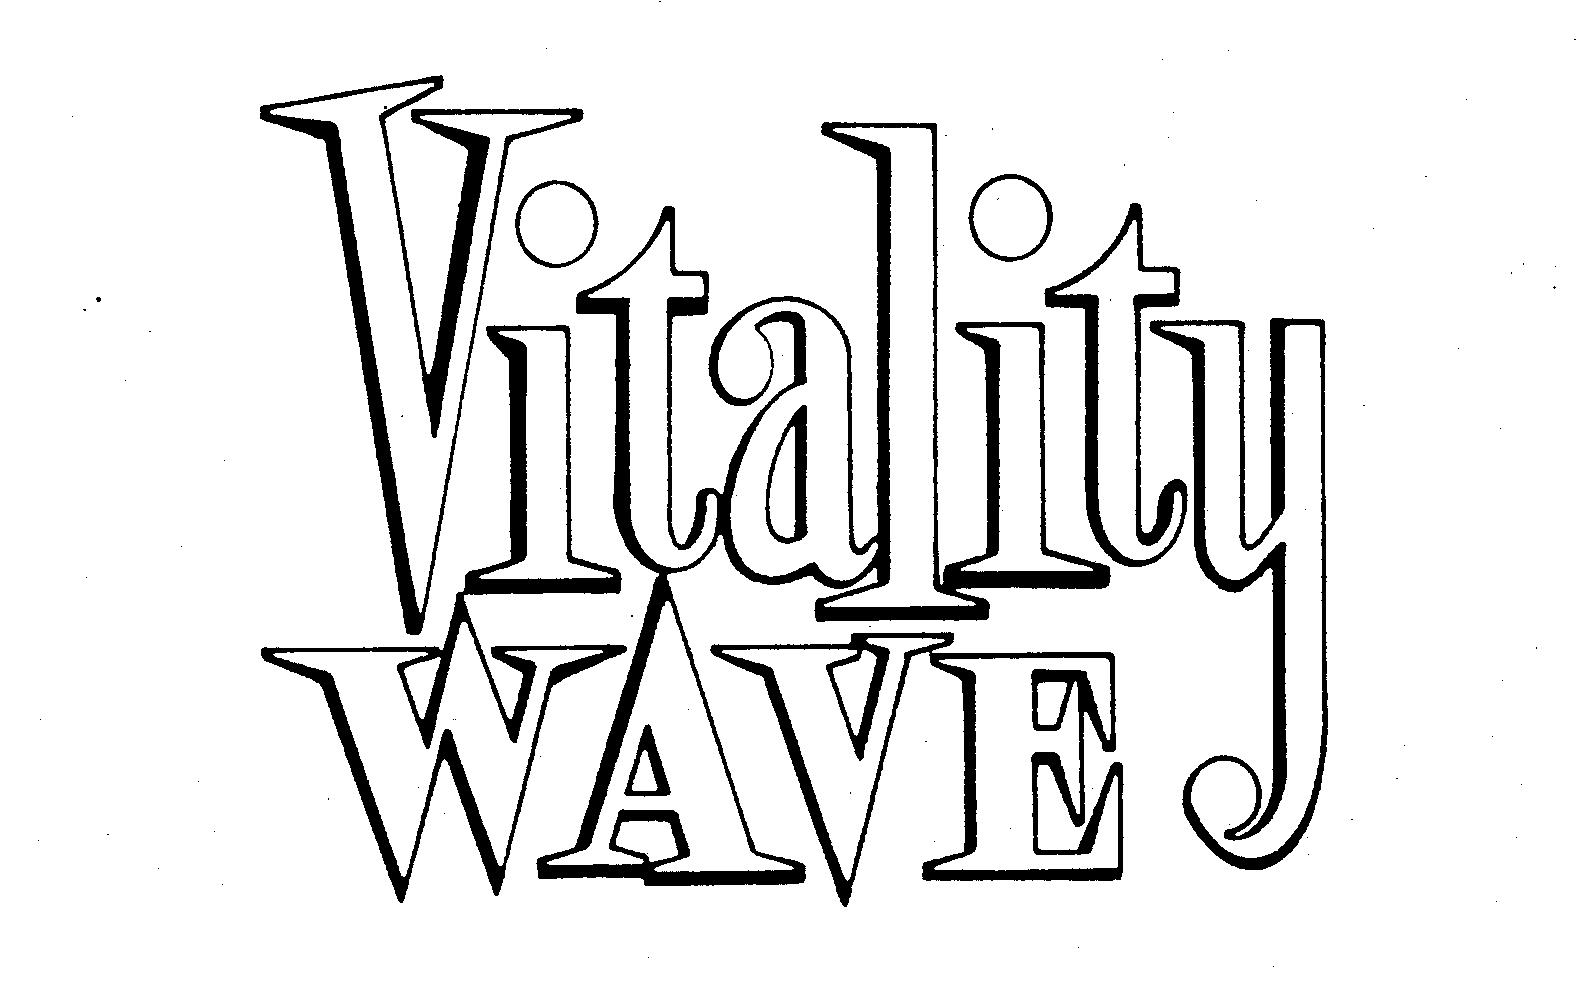  VITALITY WAVE